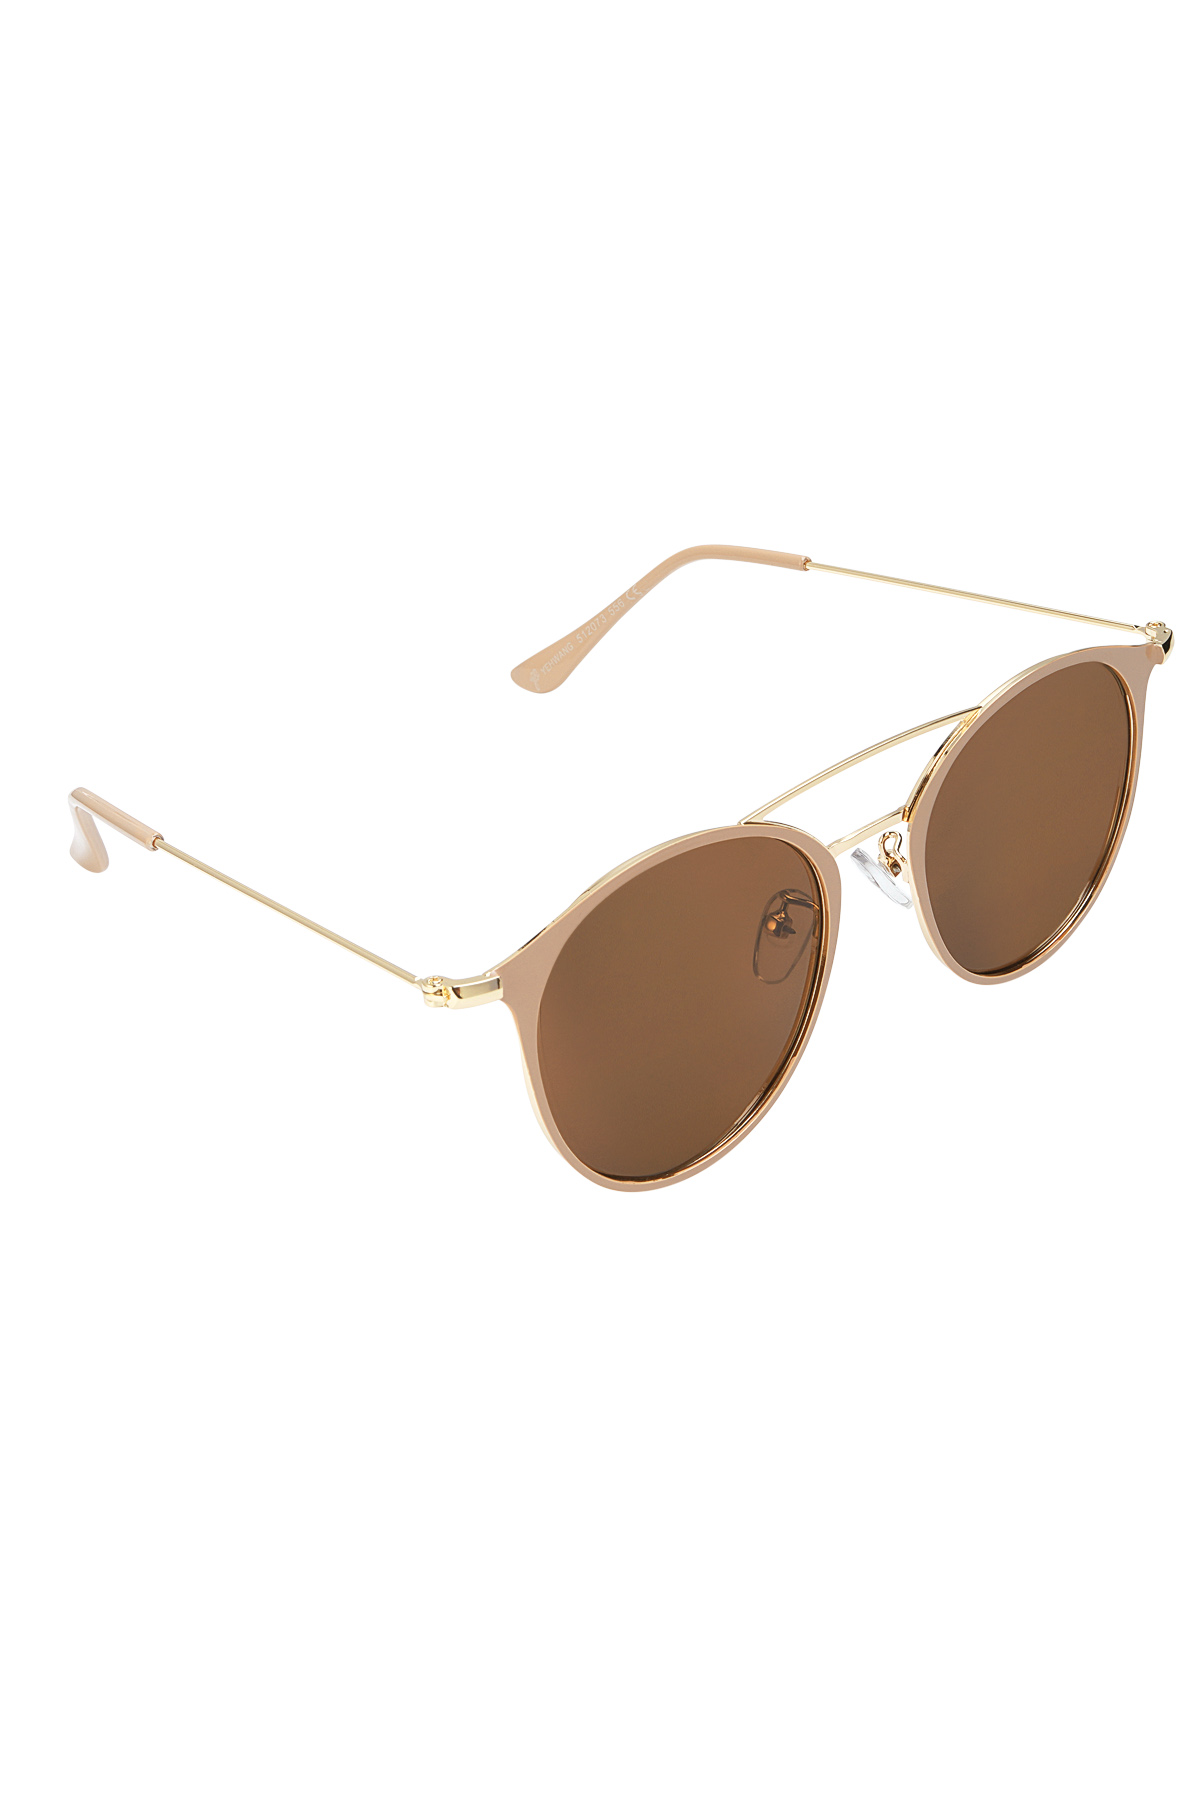 Sunglasses summer vibe - brown